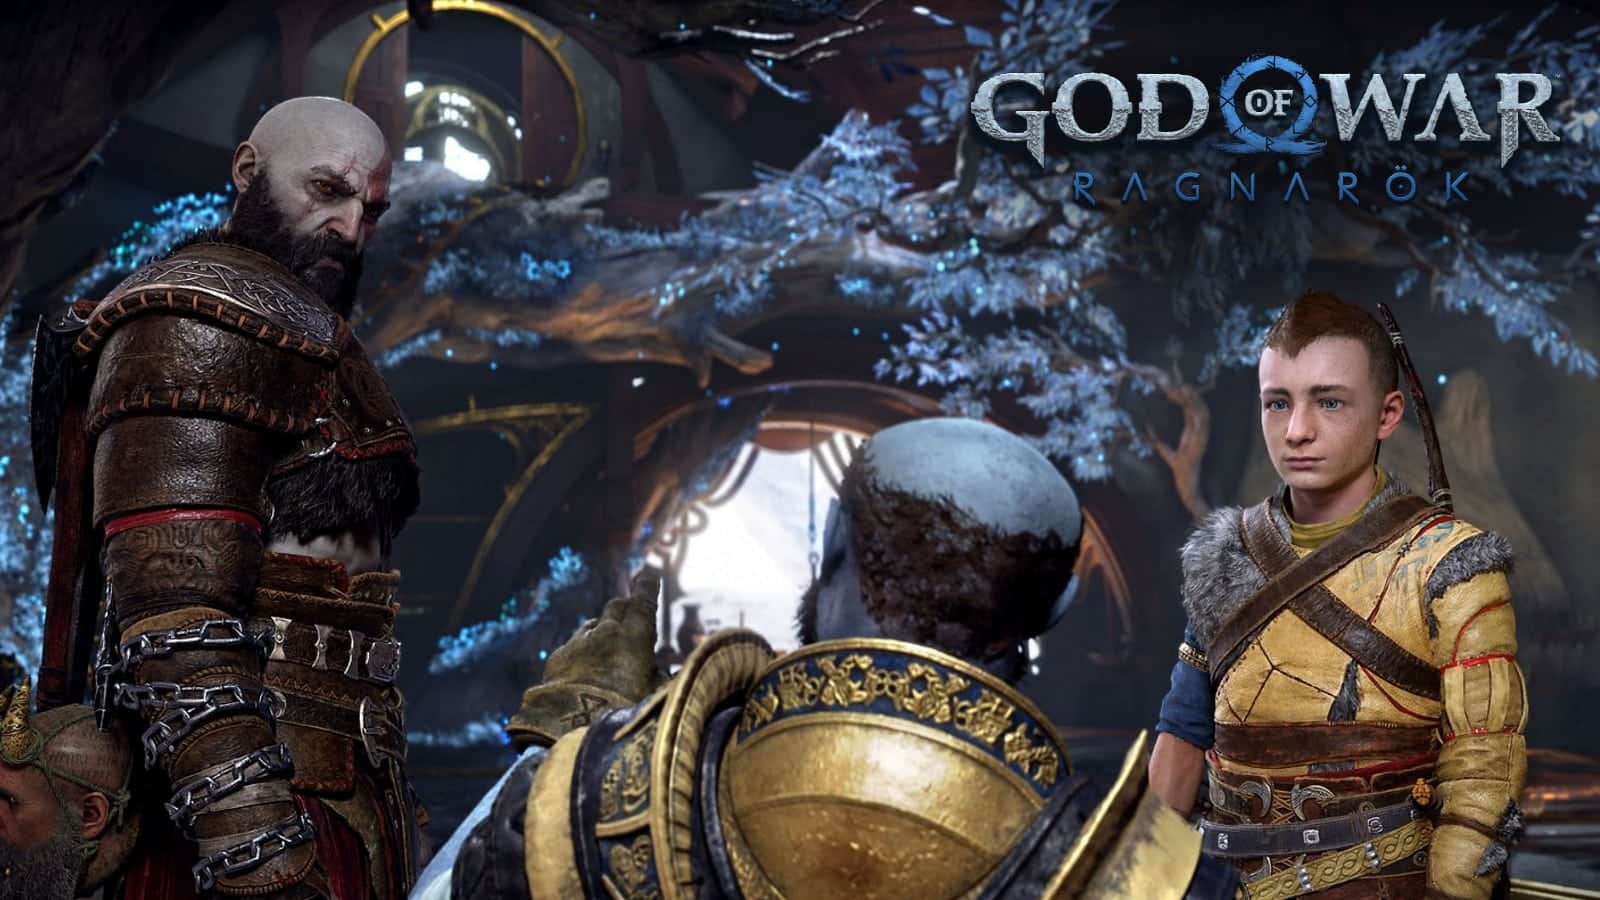 An images of Kratos and Atreus in God of War Ragnarok